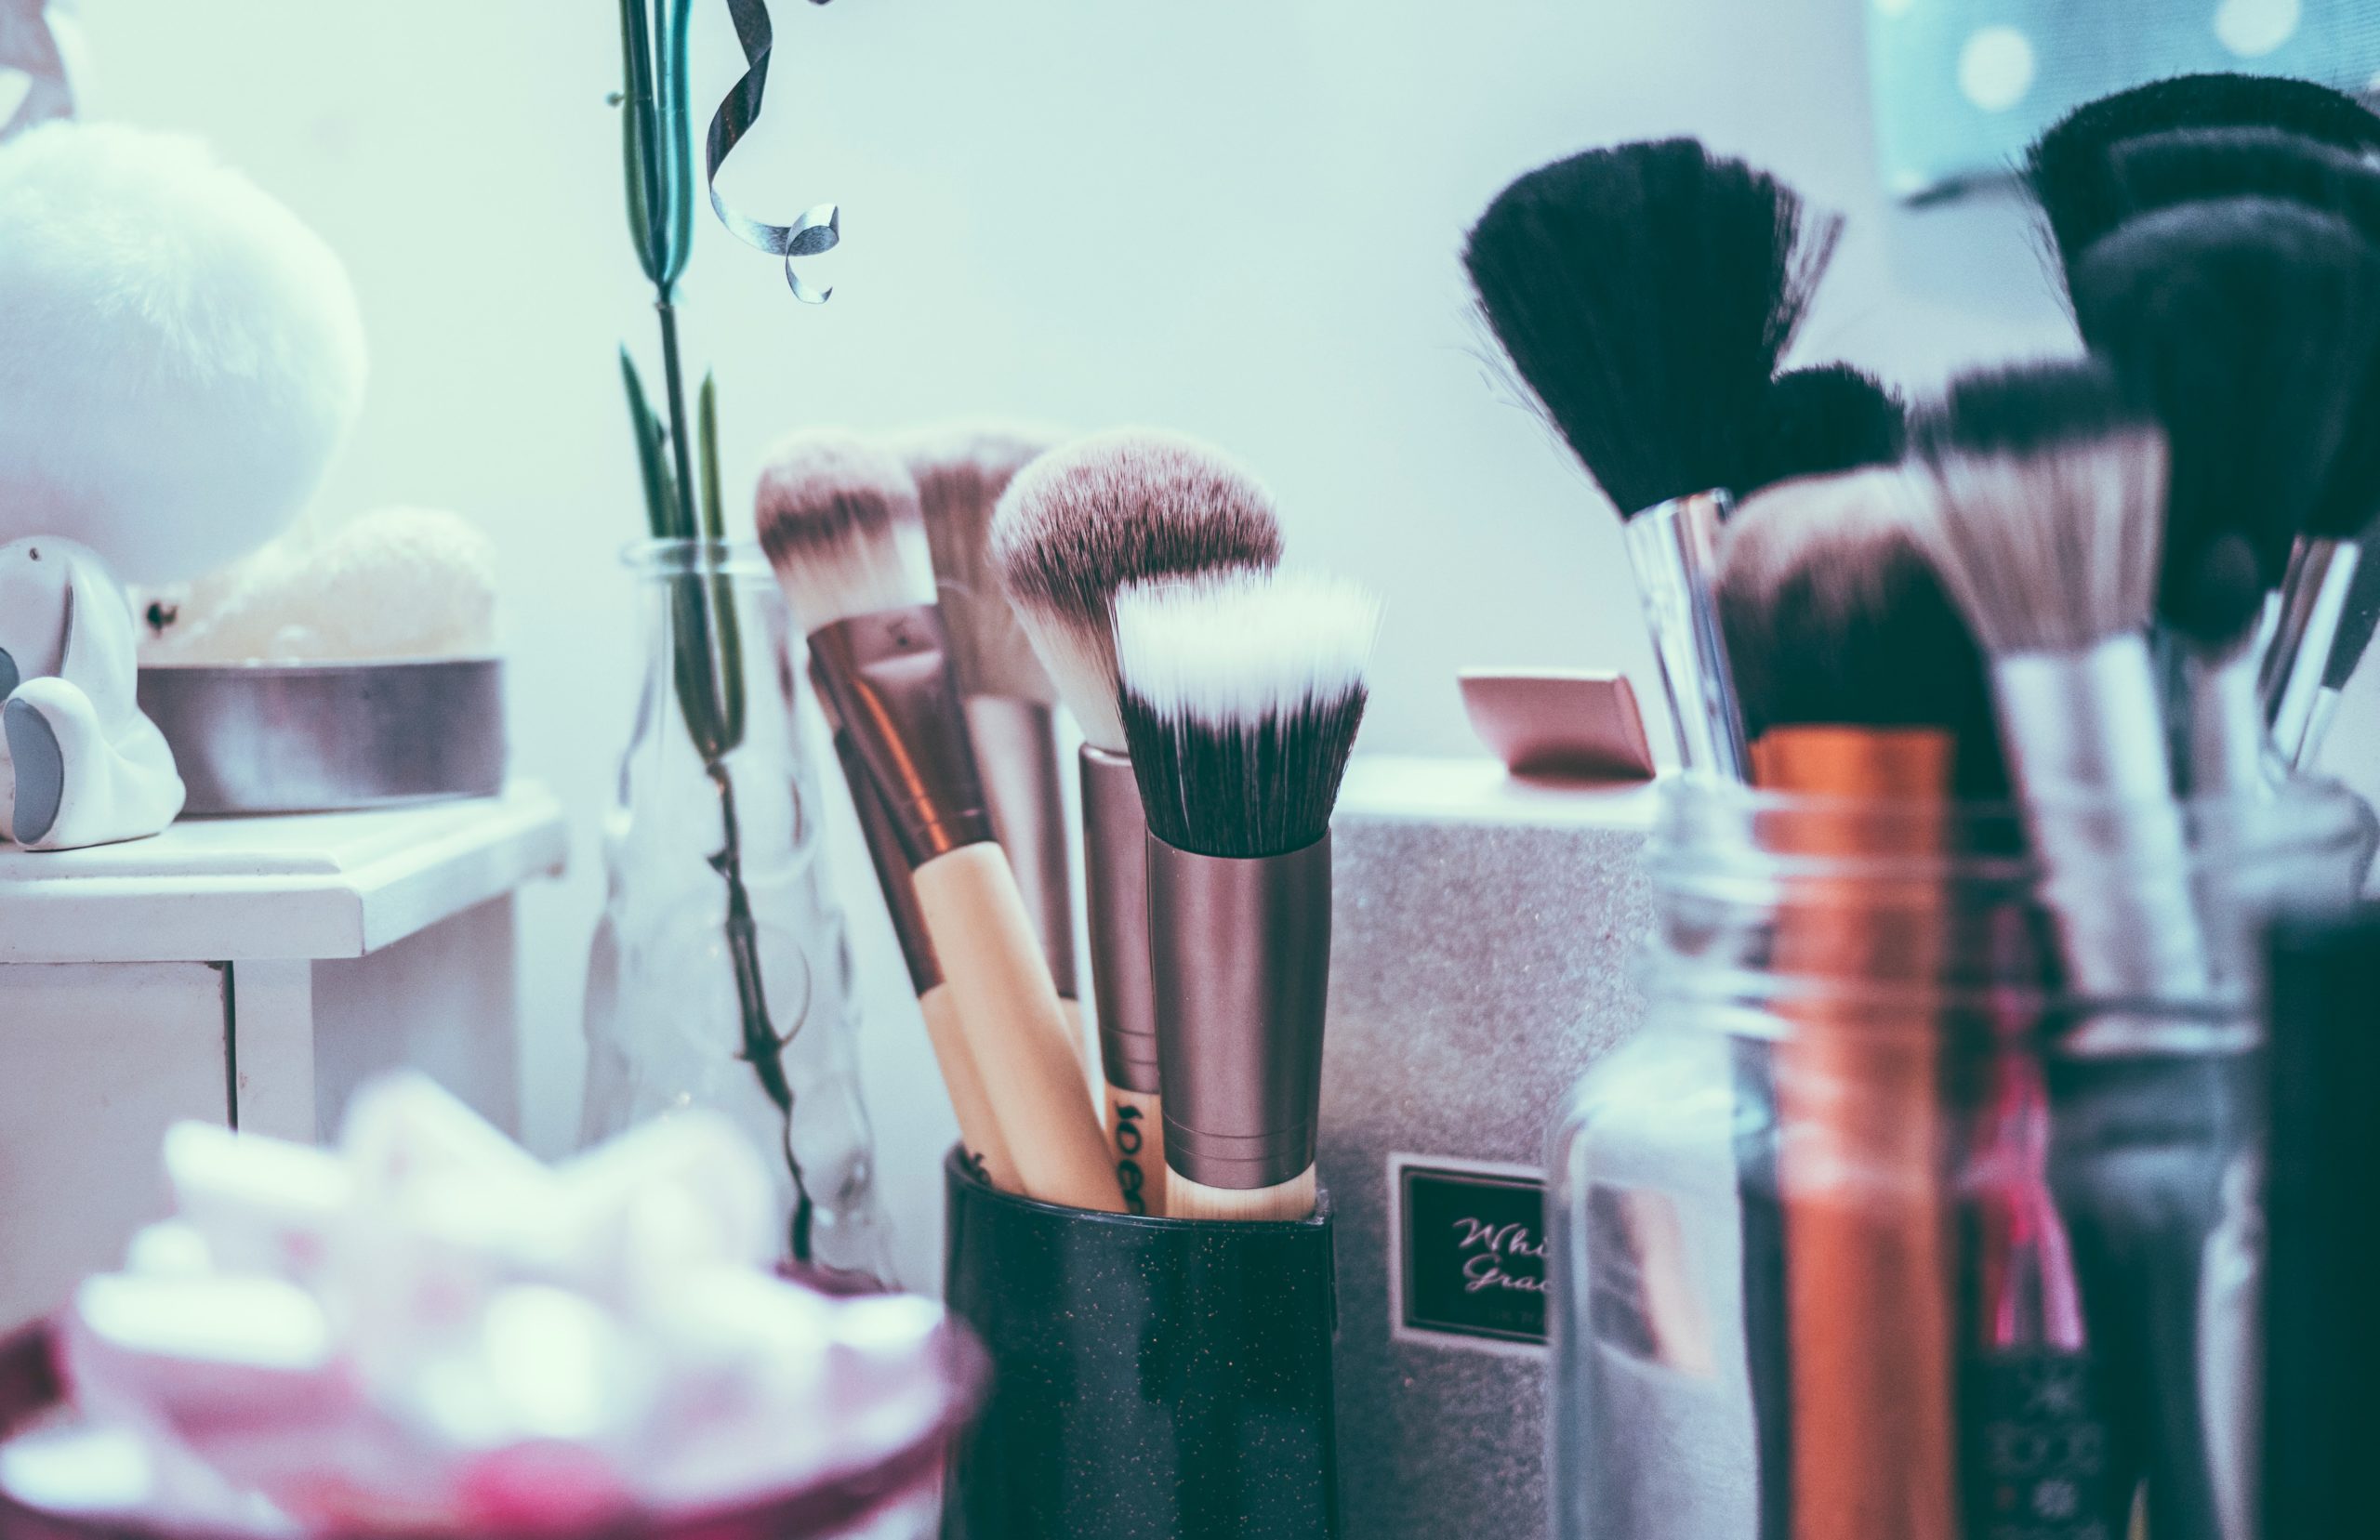 Make up brushes in jars - beauty documentaries